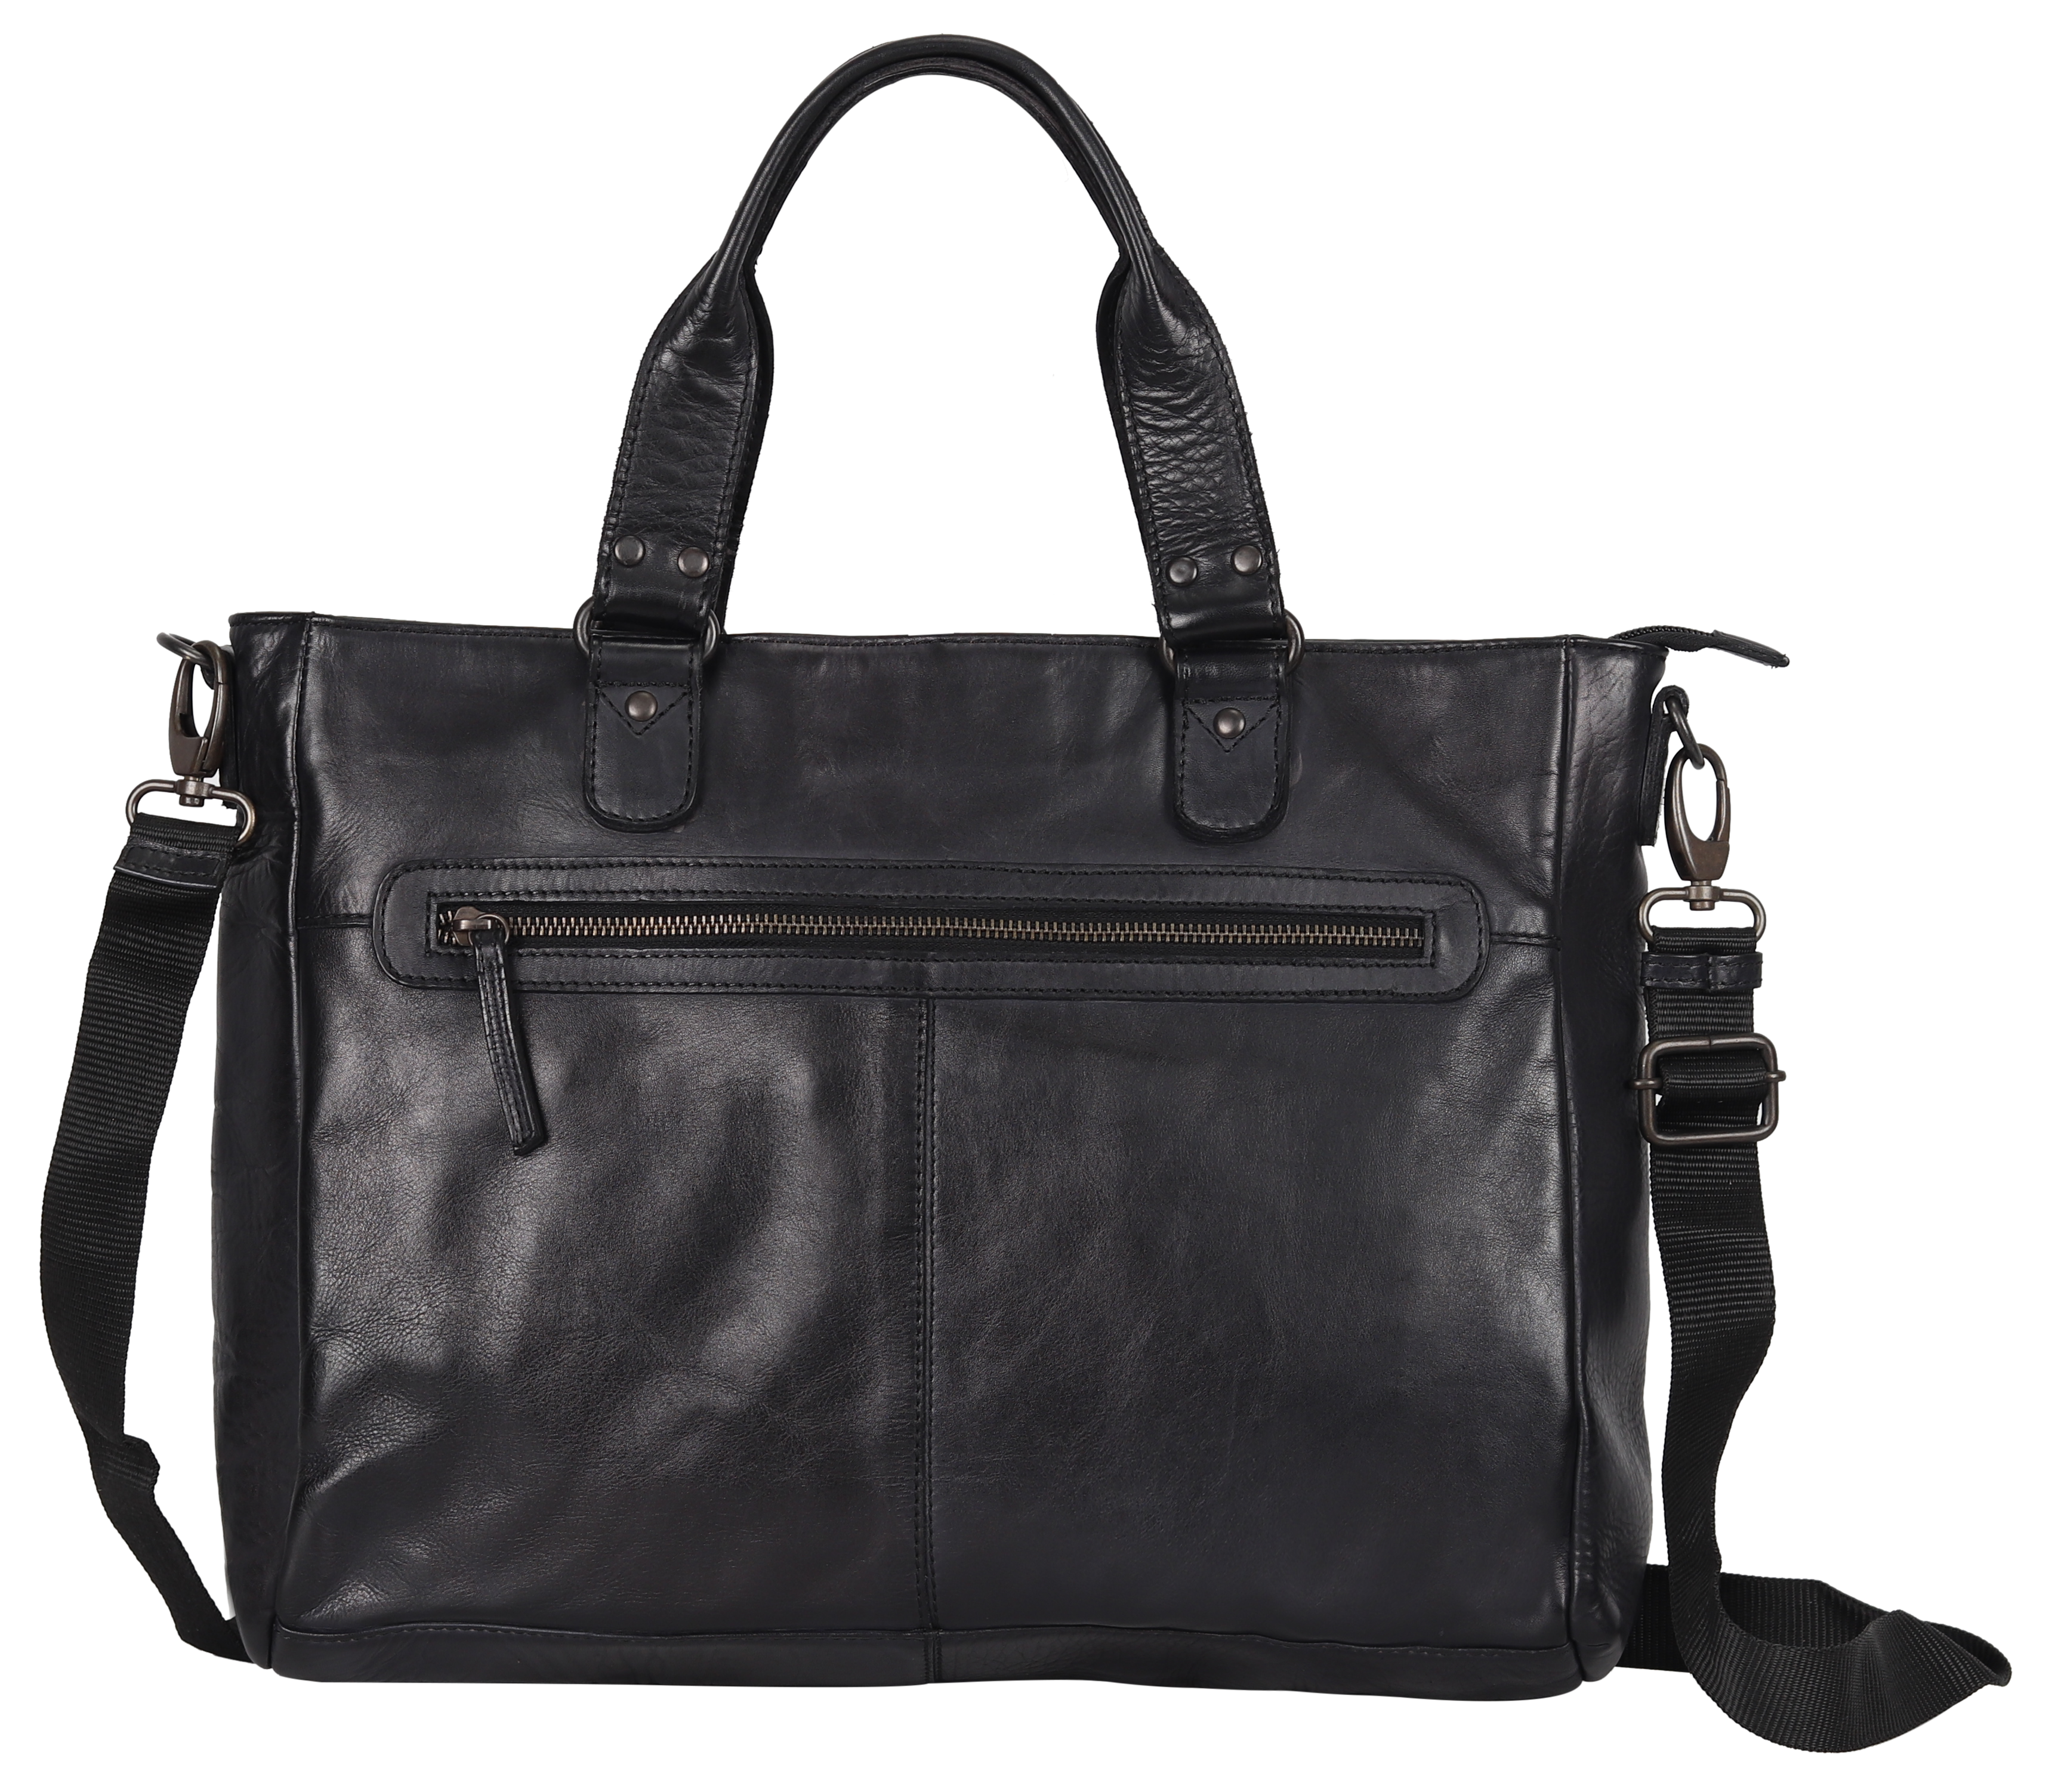 BOL 2 Handle Leather Laptop Bag